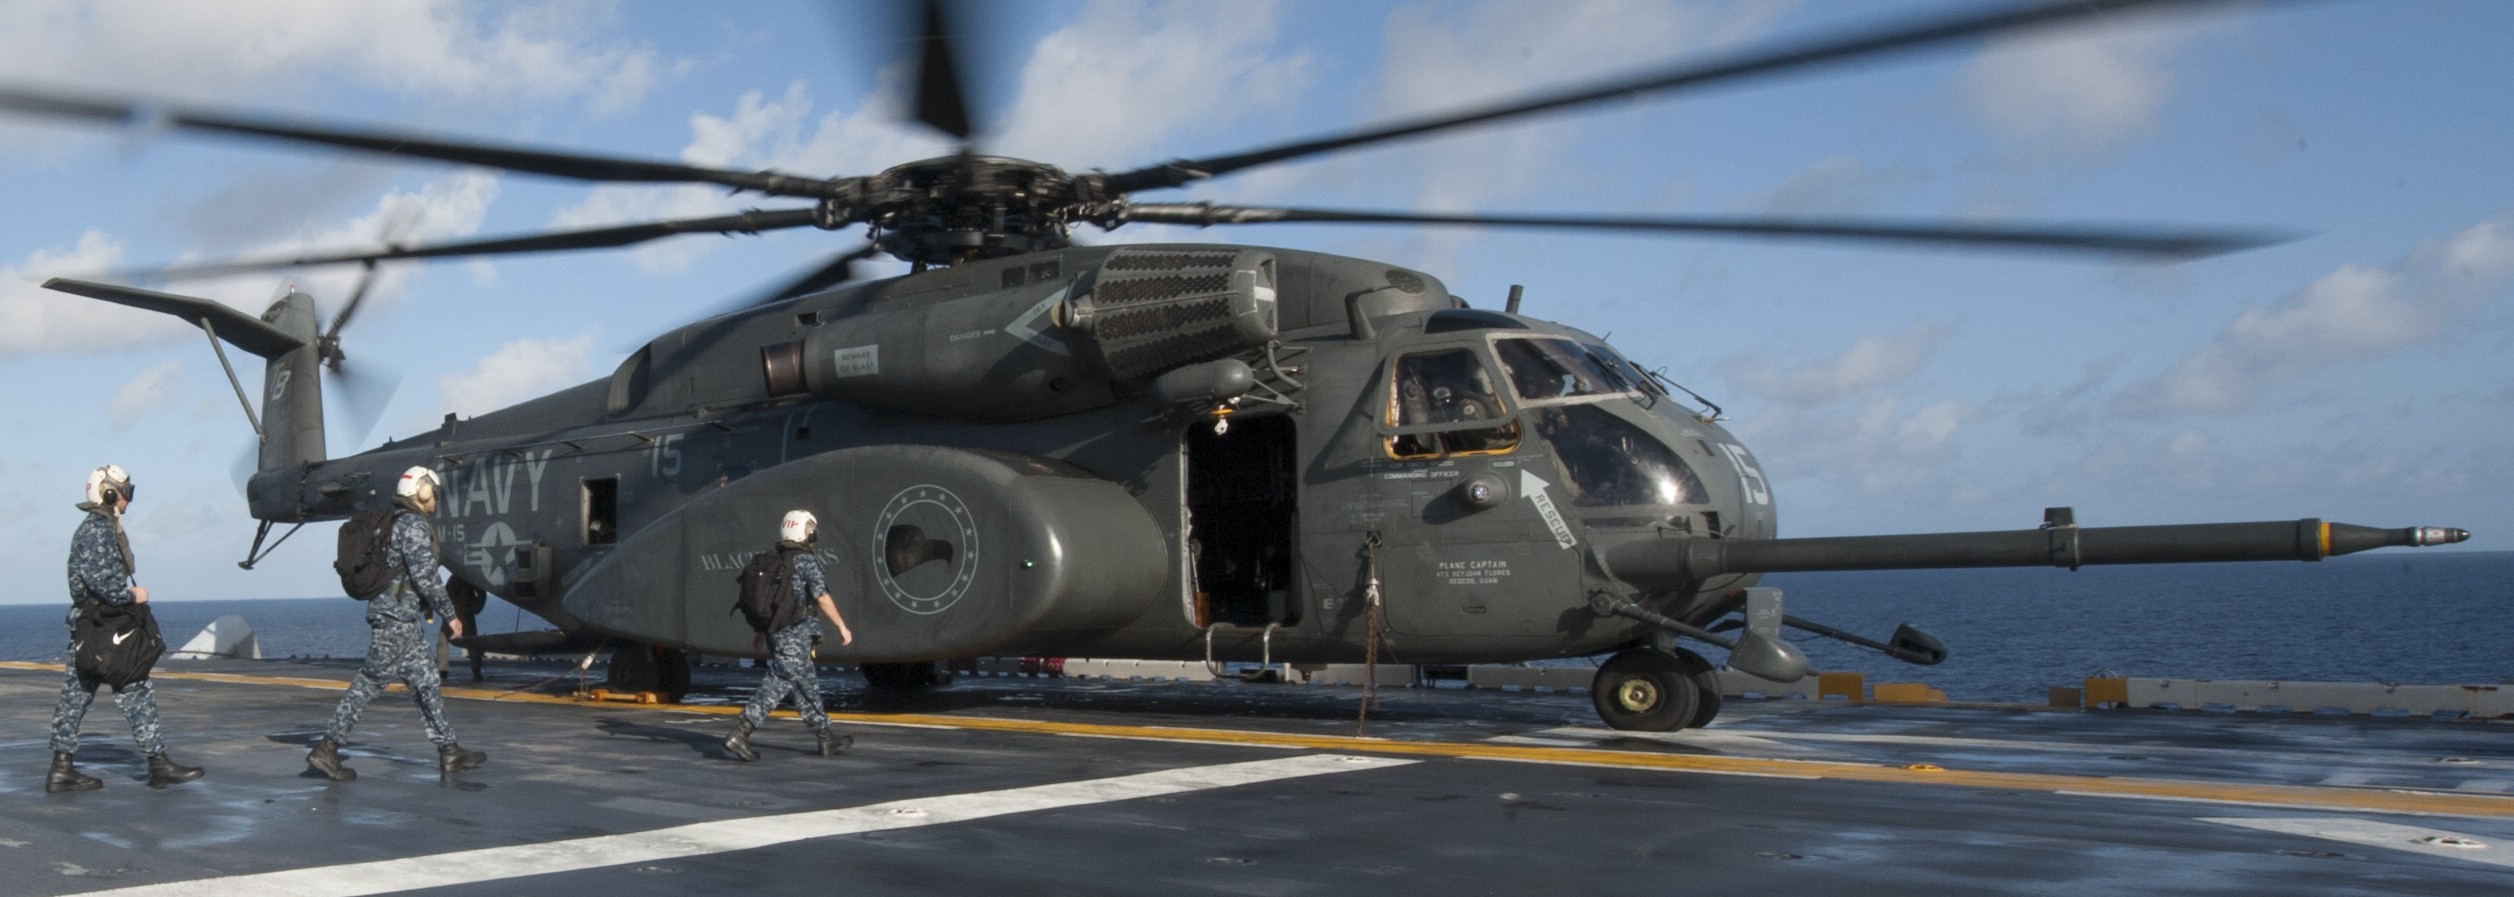 hm-15 blackhawks helicopter mine countermeasures squadron navy mh-53e sea dragon 06